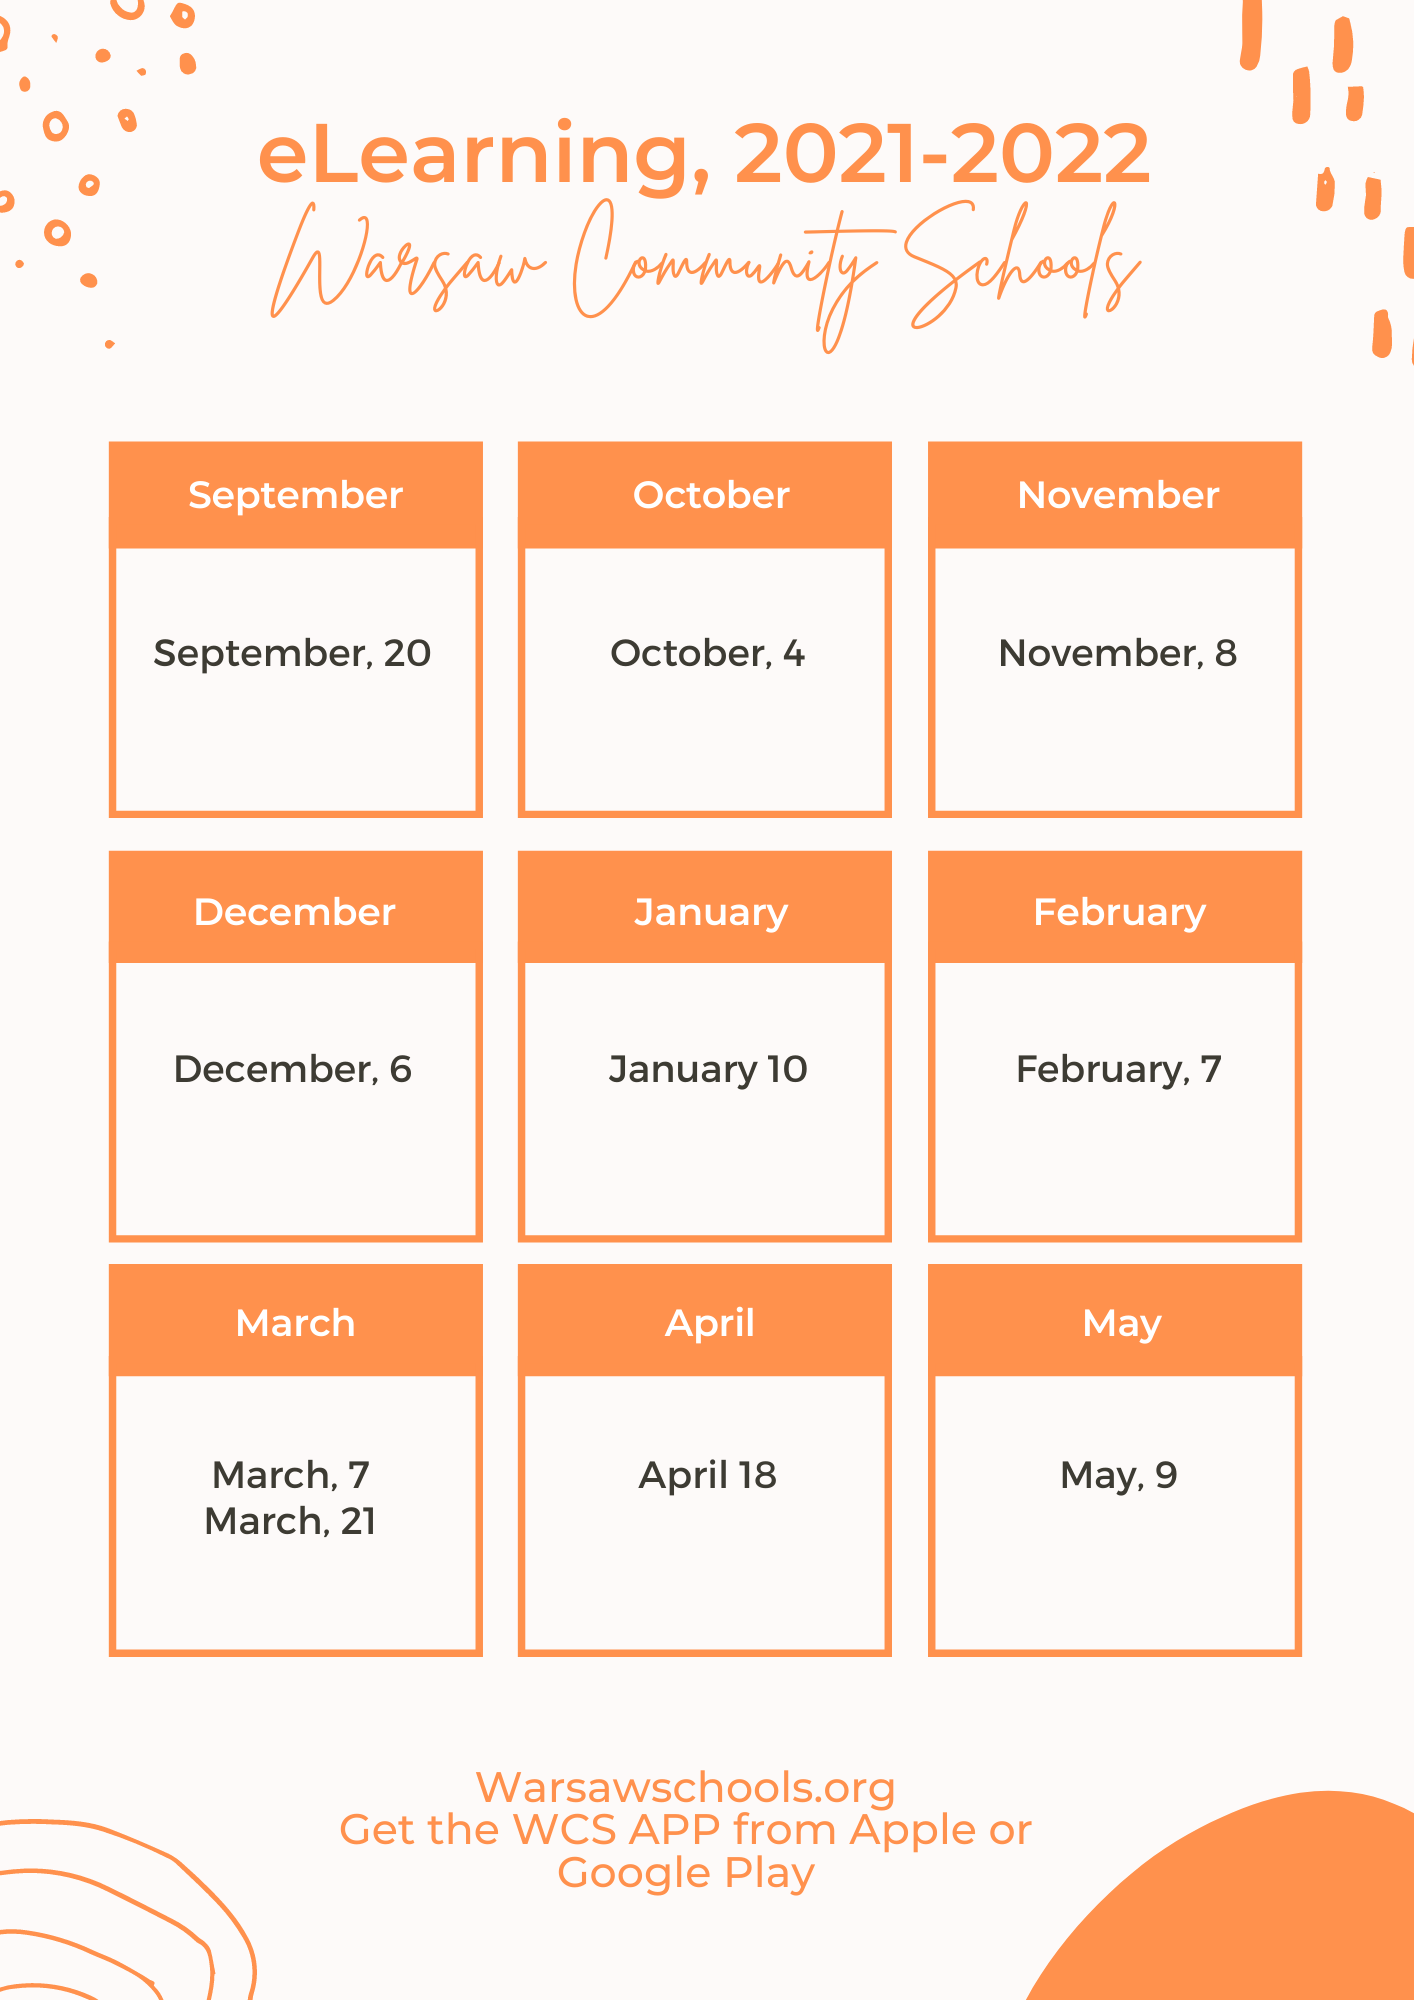 eLearning Days Calendar